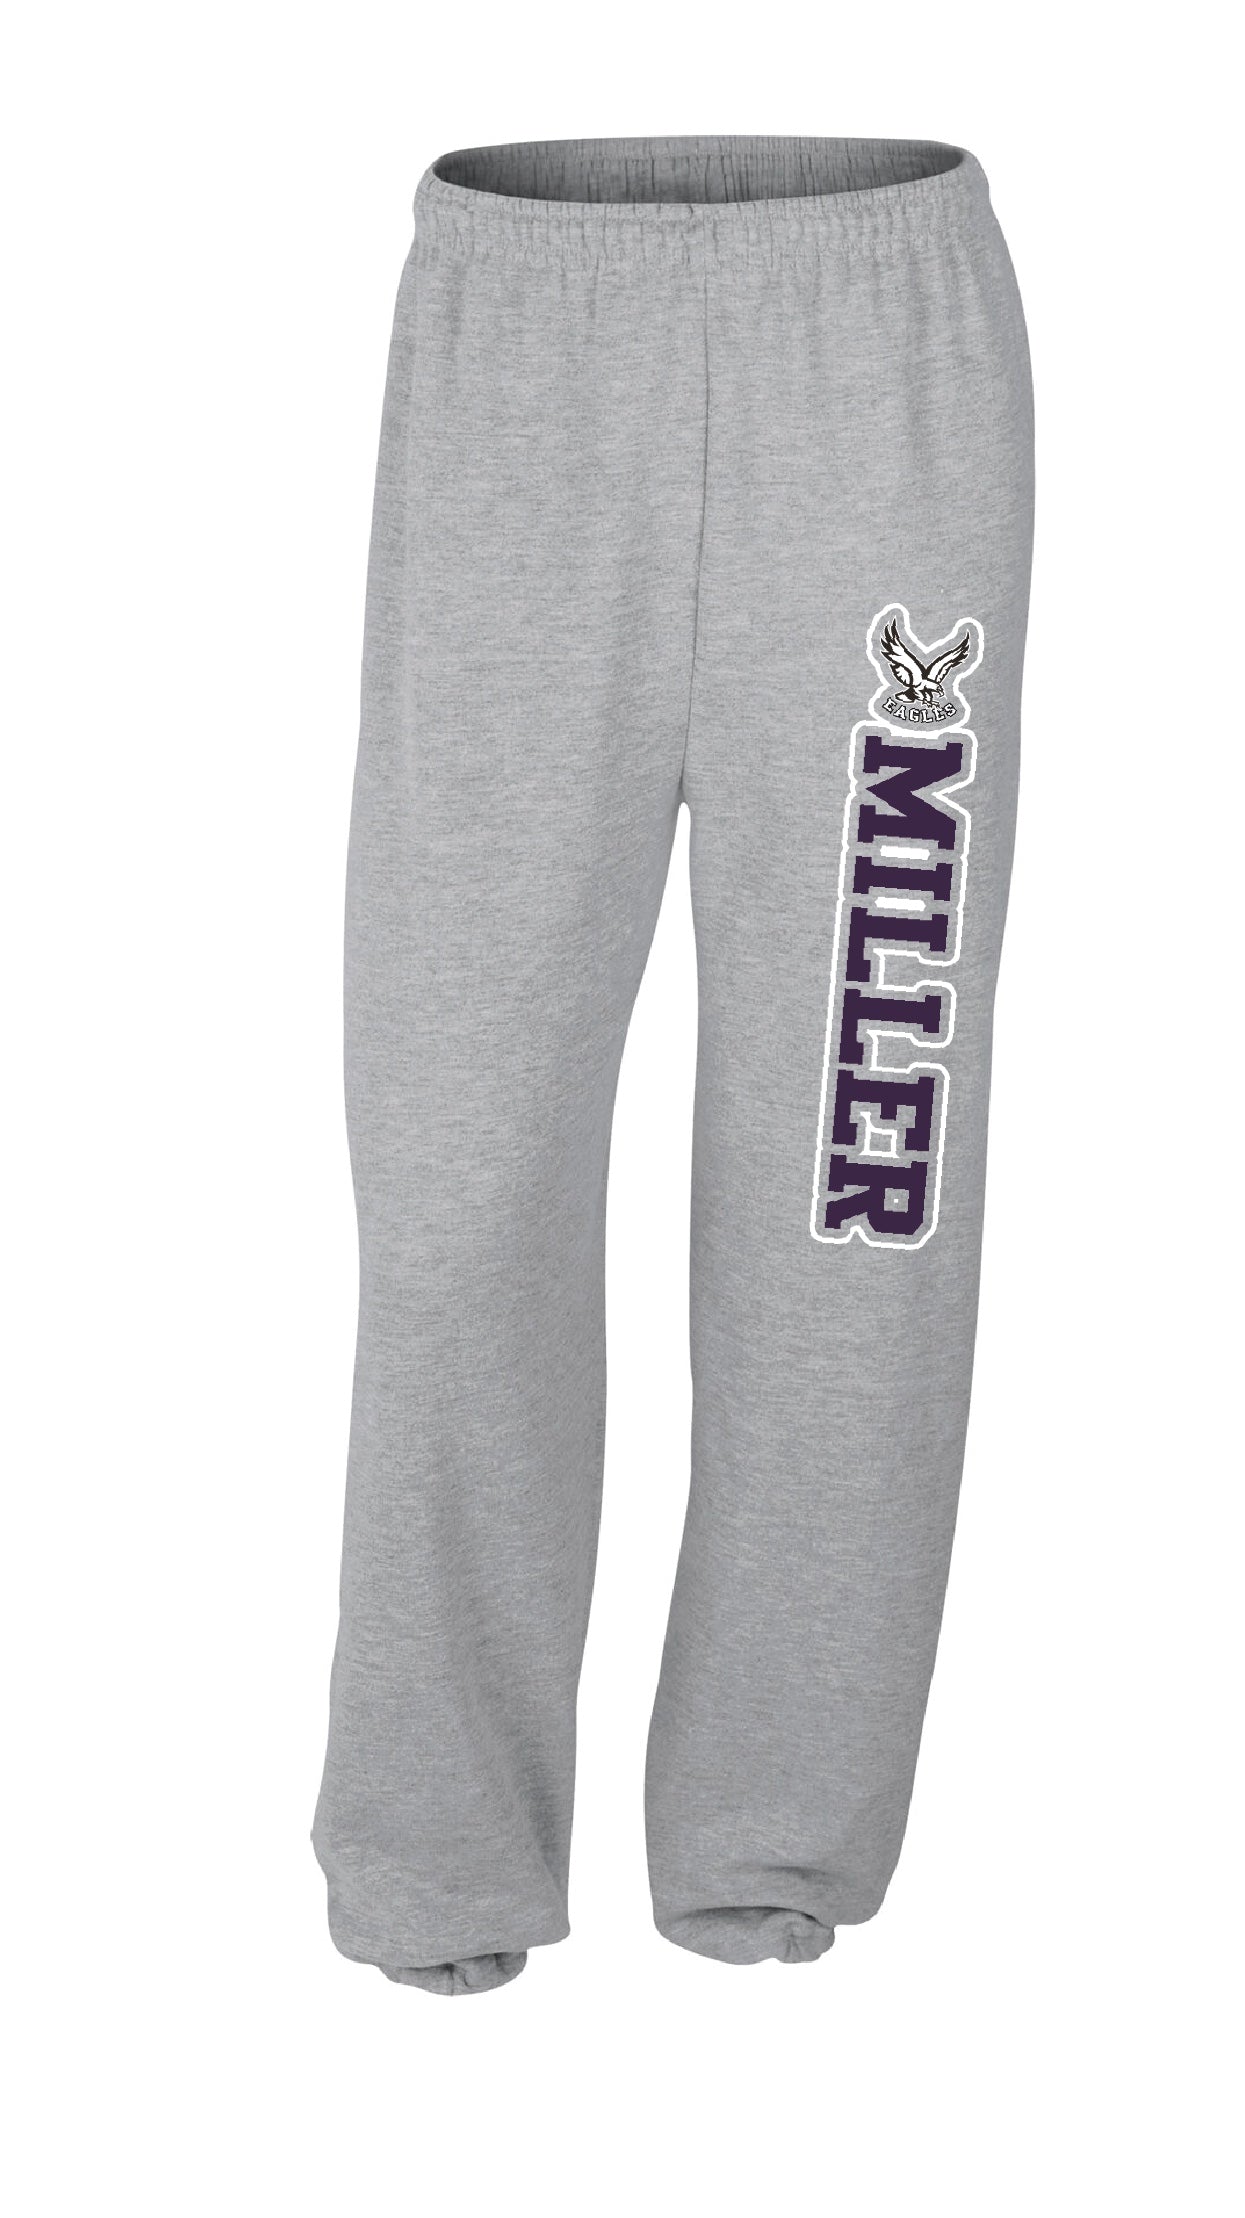 Youth "Miller Spirit Wear" Sweatpants